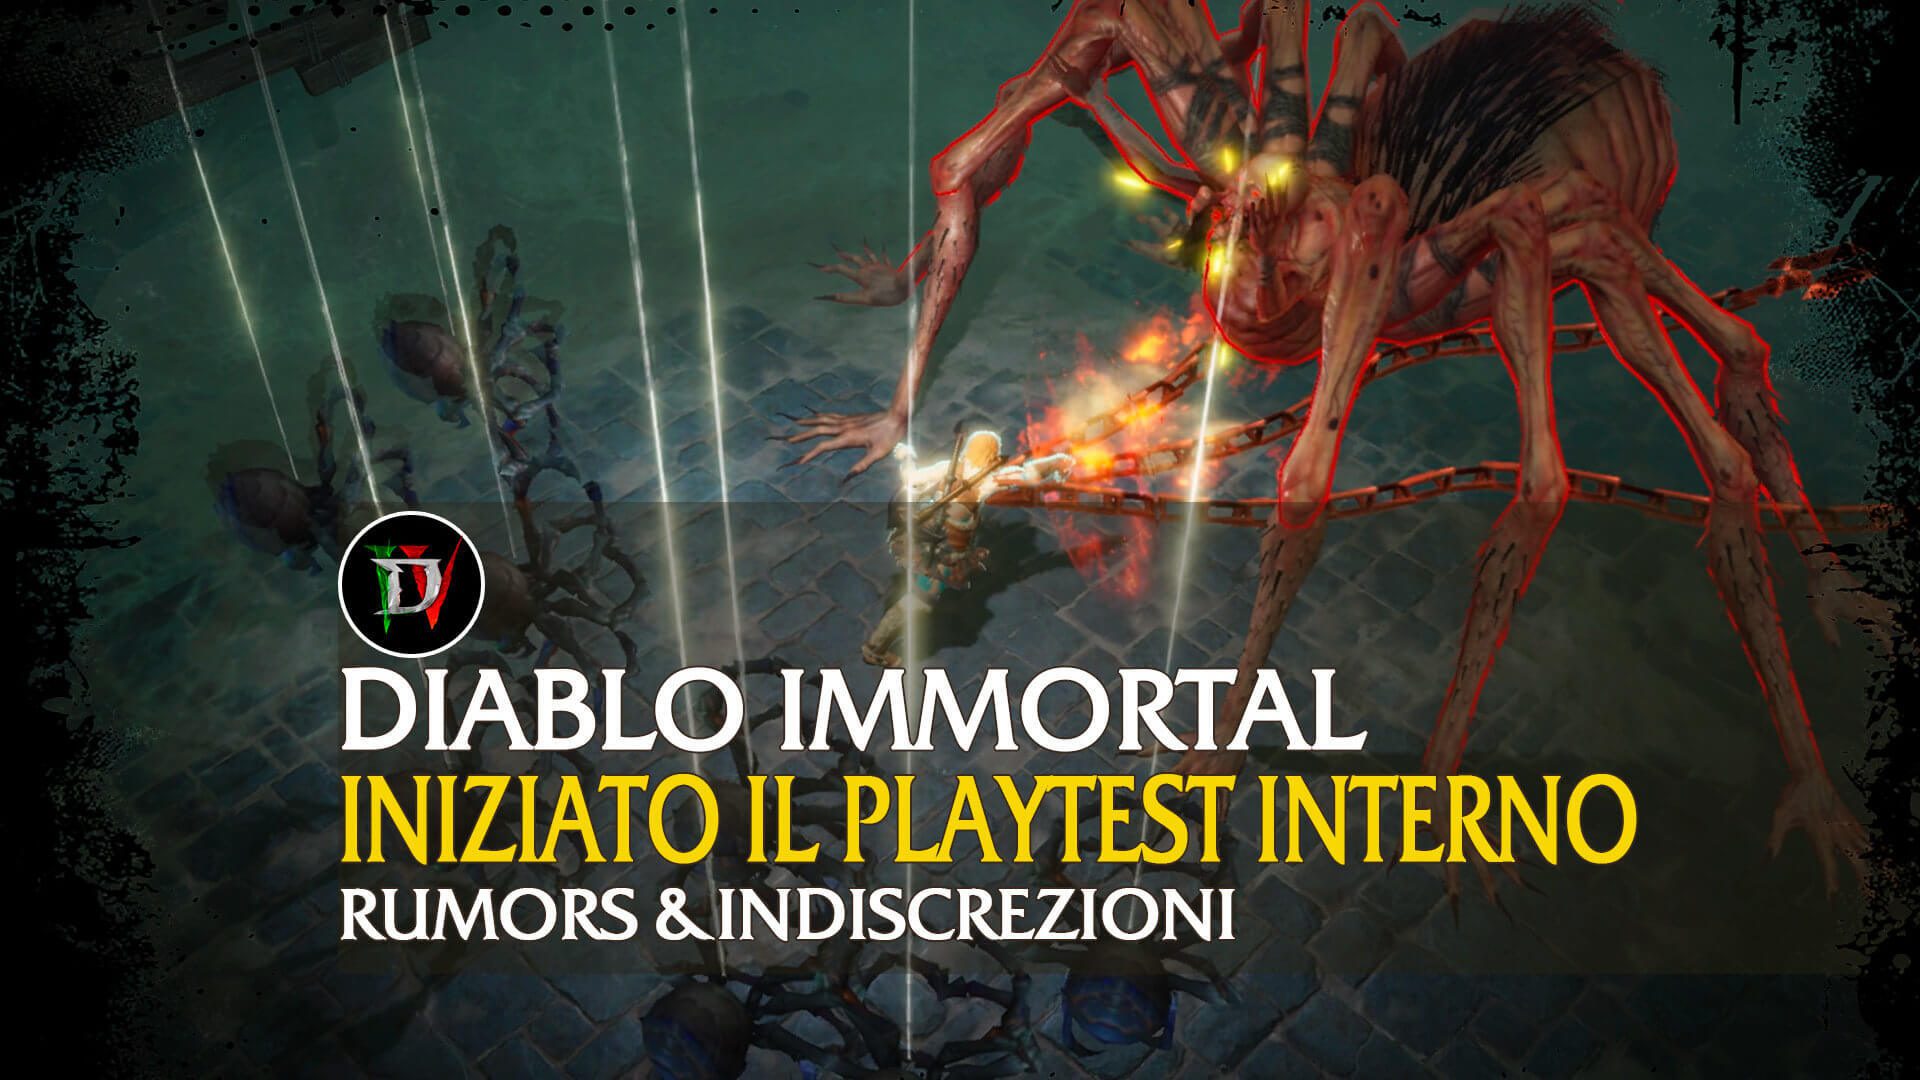 sign up for diablo immortal beta